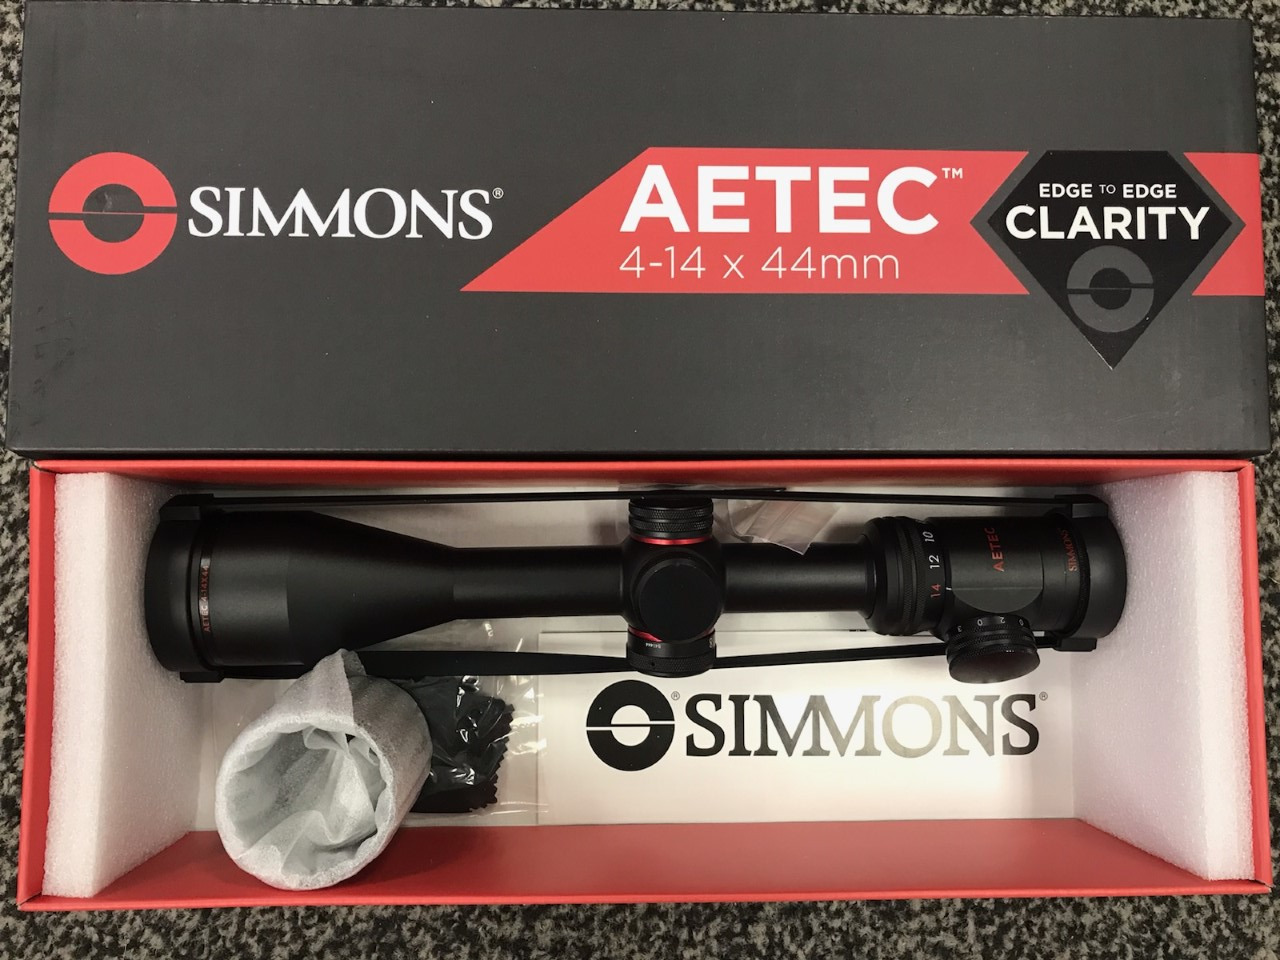 Simmons Aetec 4-14x44 scope ** FREE SHIPPING TO CONT USA** Illuminated 5A41444I